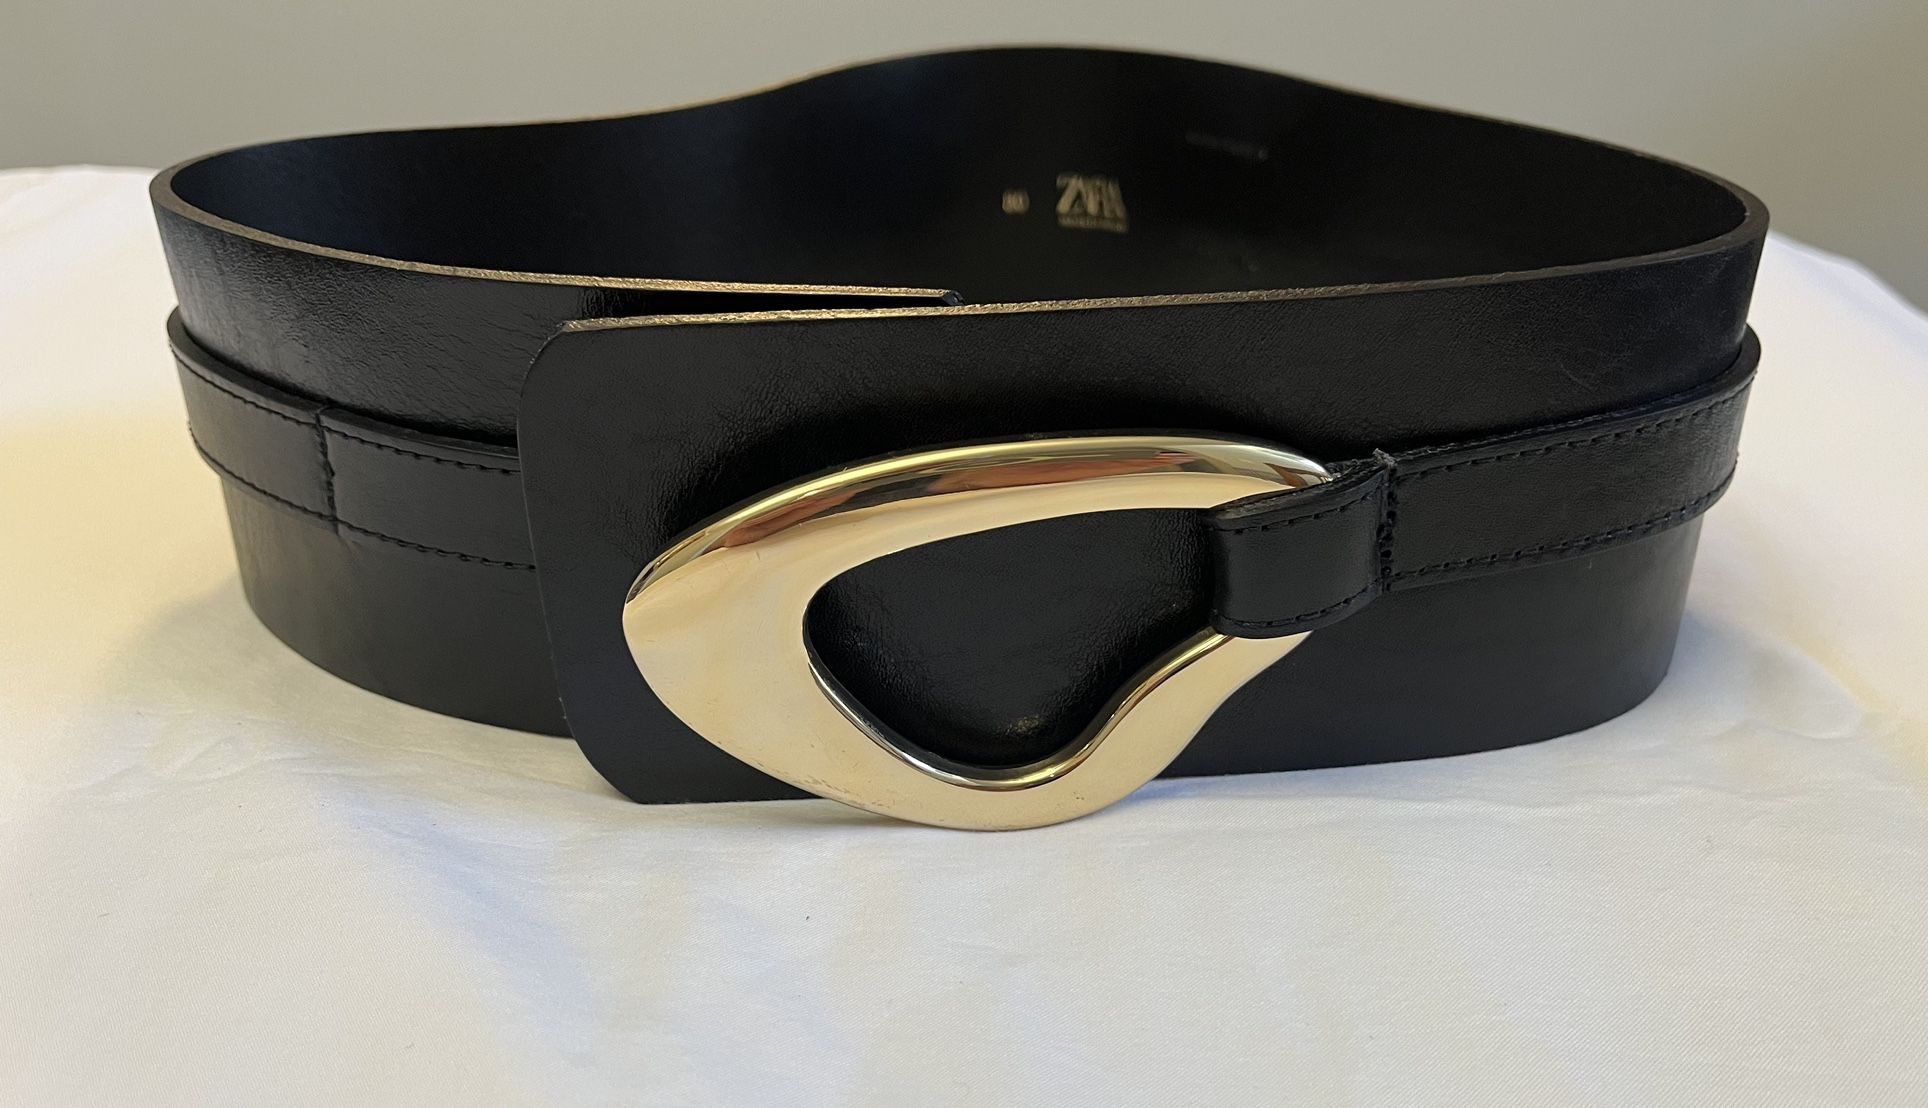 Zara Black Leather Sash BeltWith Gold Buckle